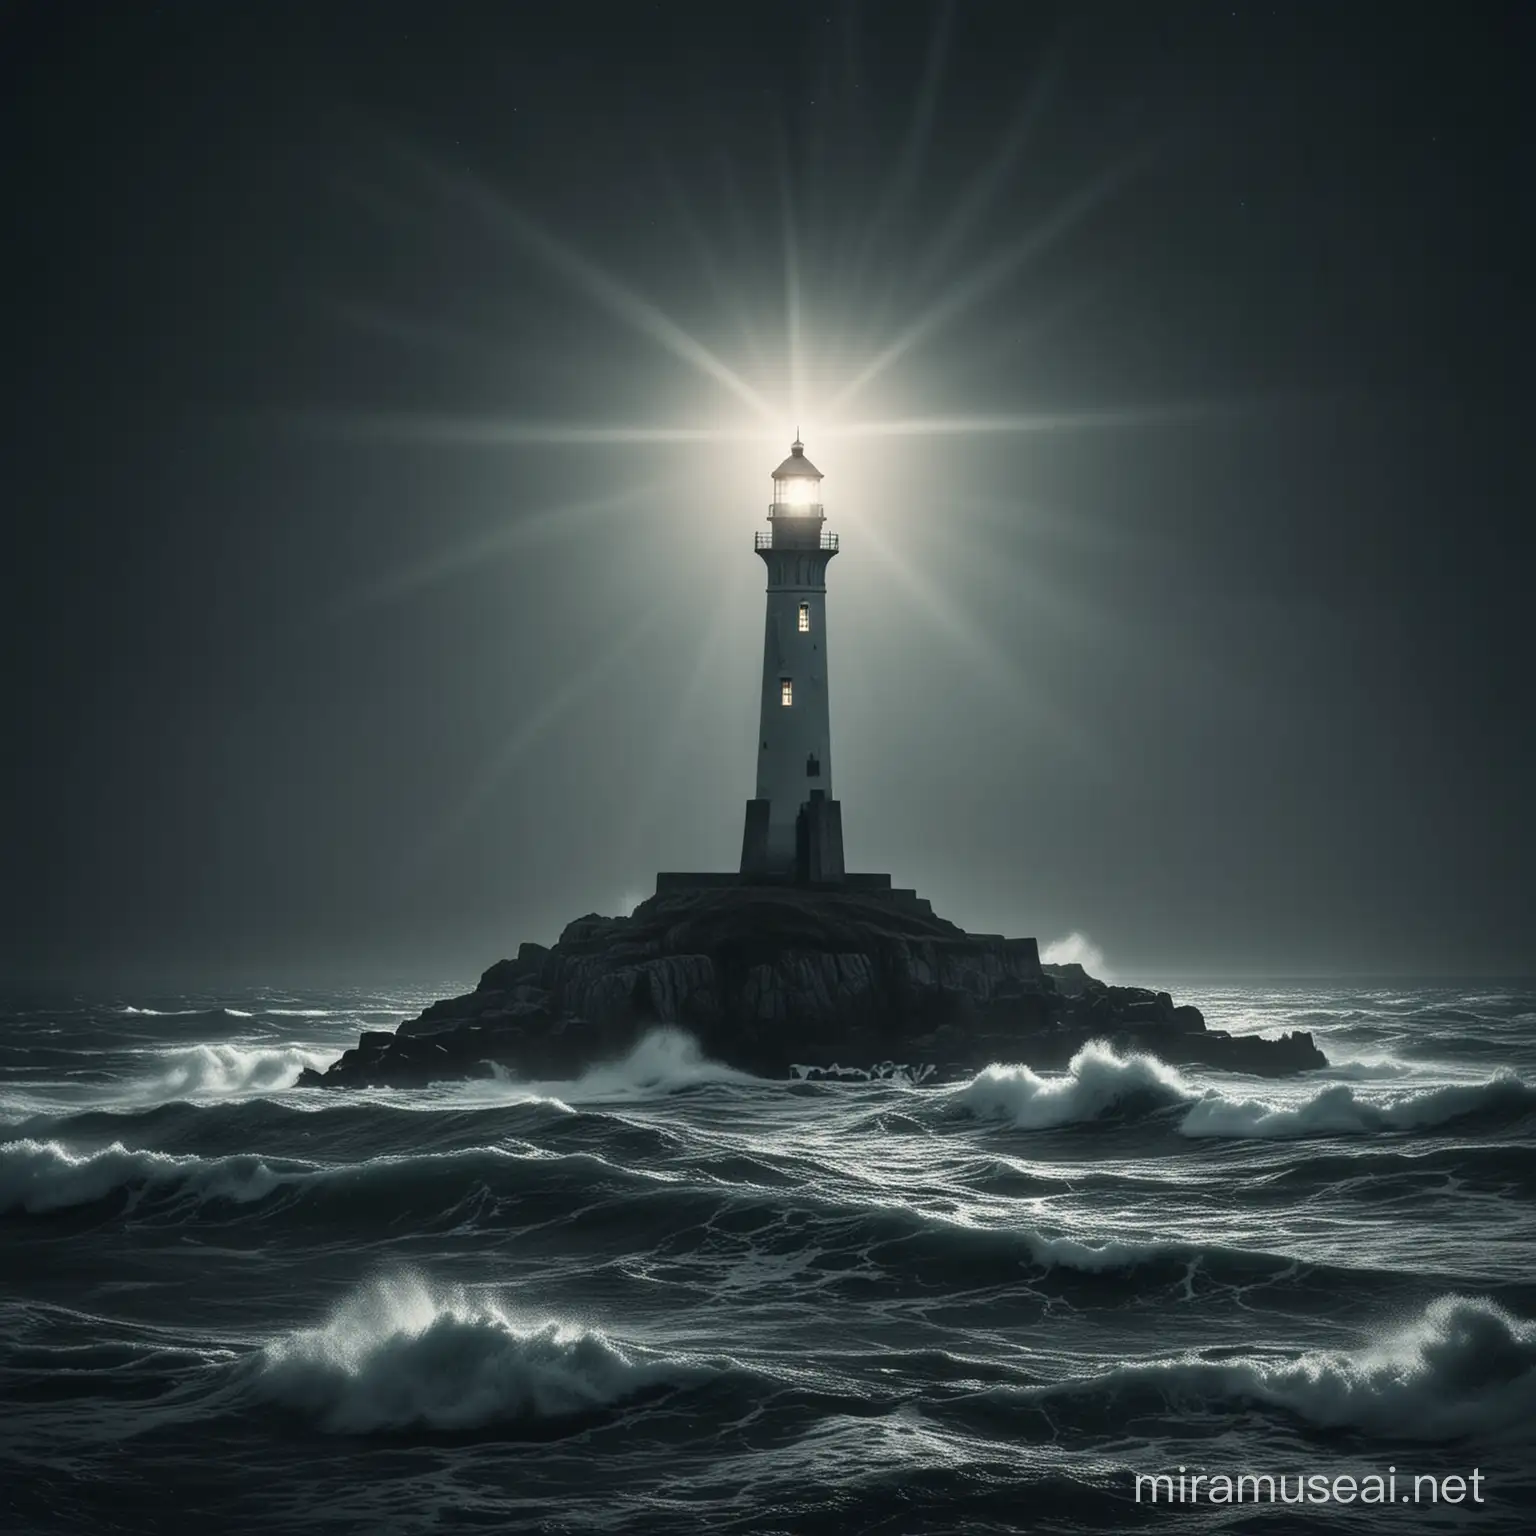 Guiding Light Lighthouse Illuminating Dark Seas